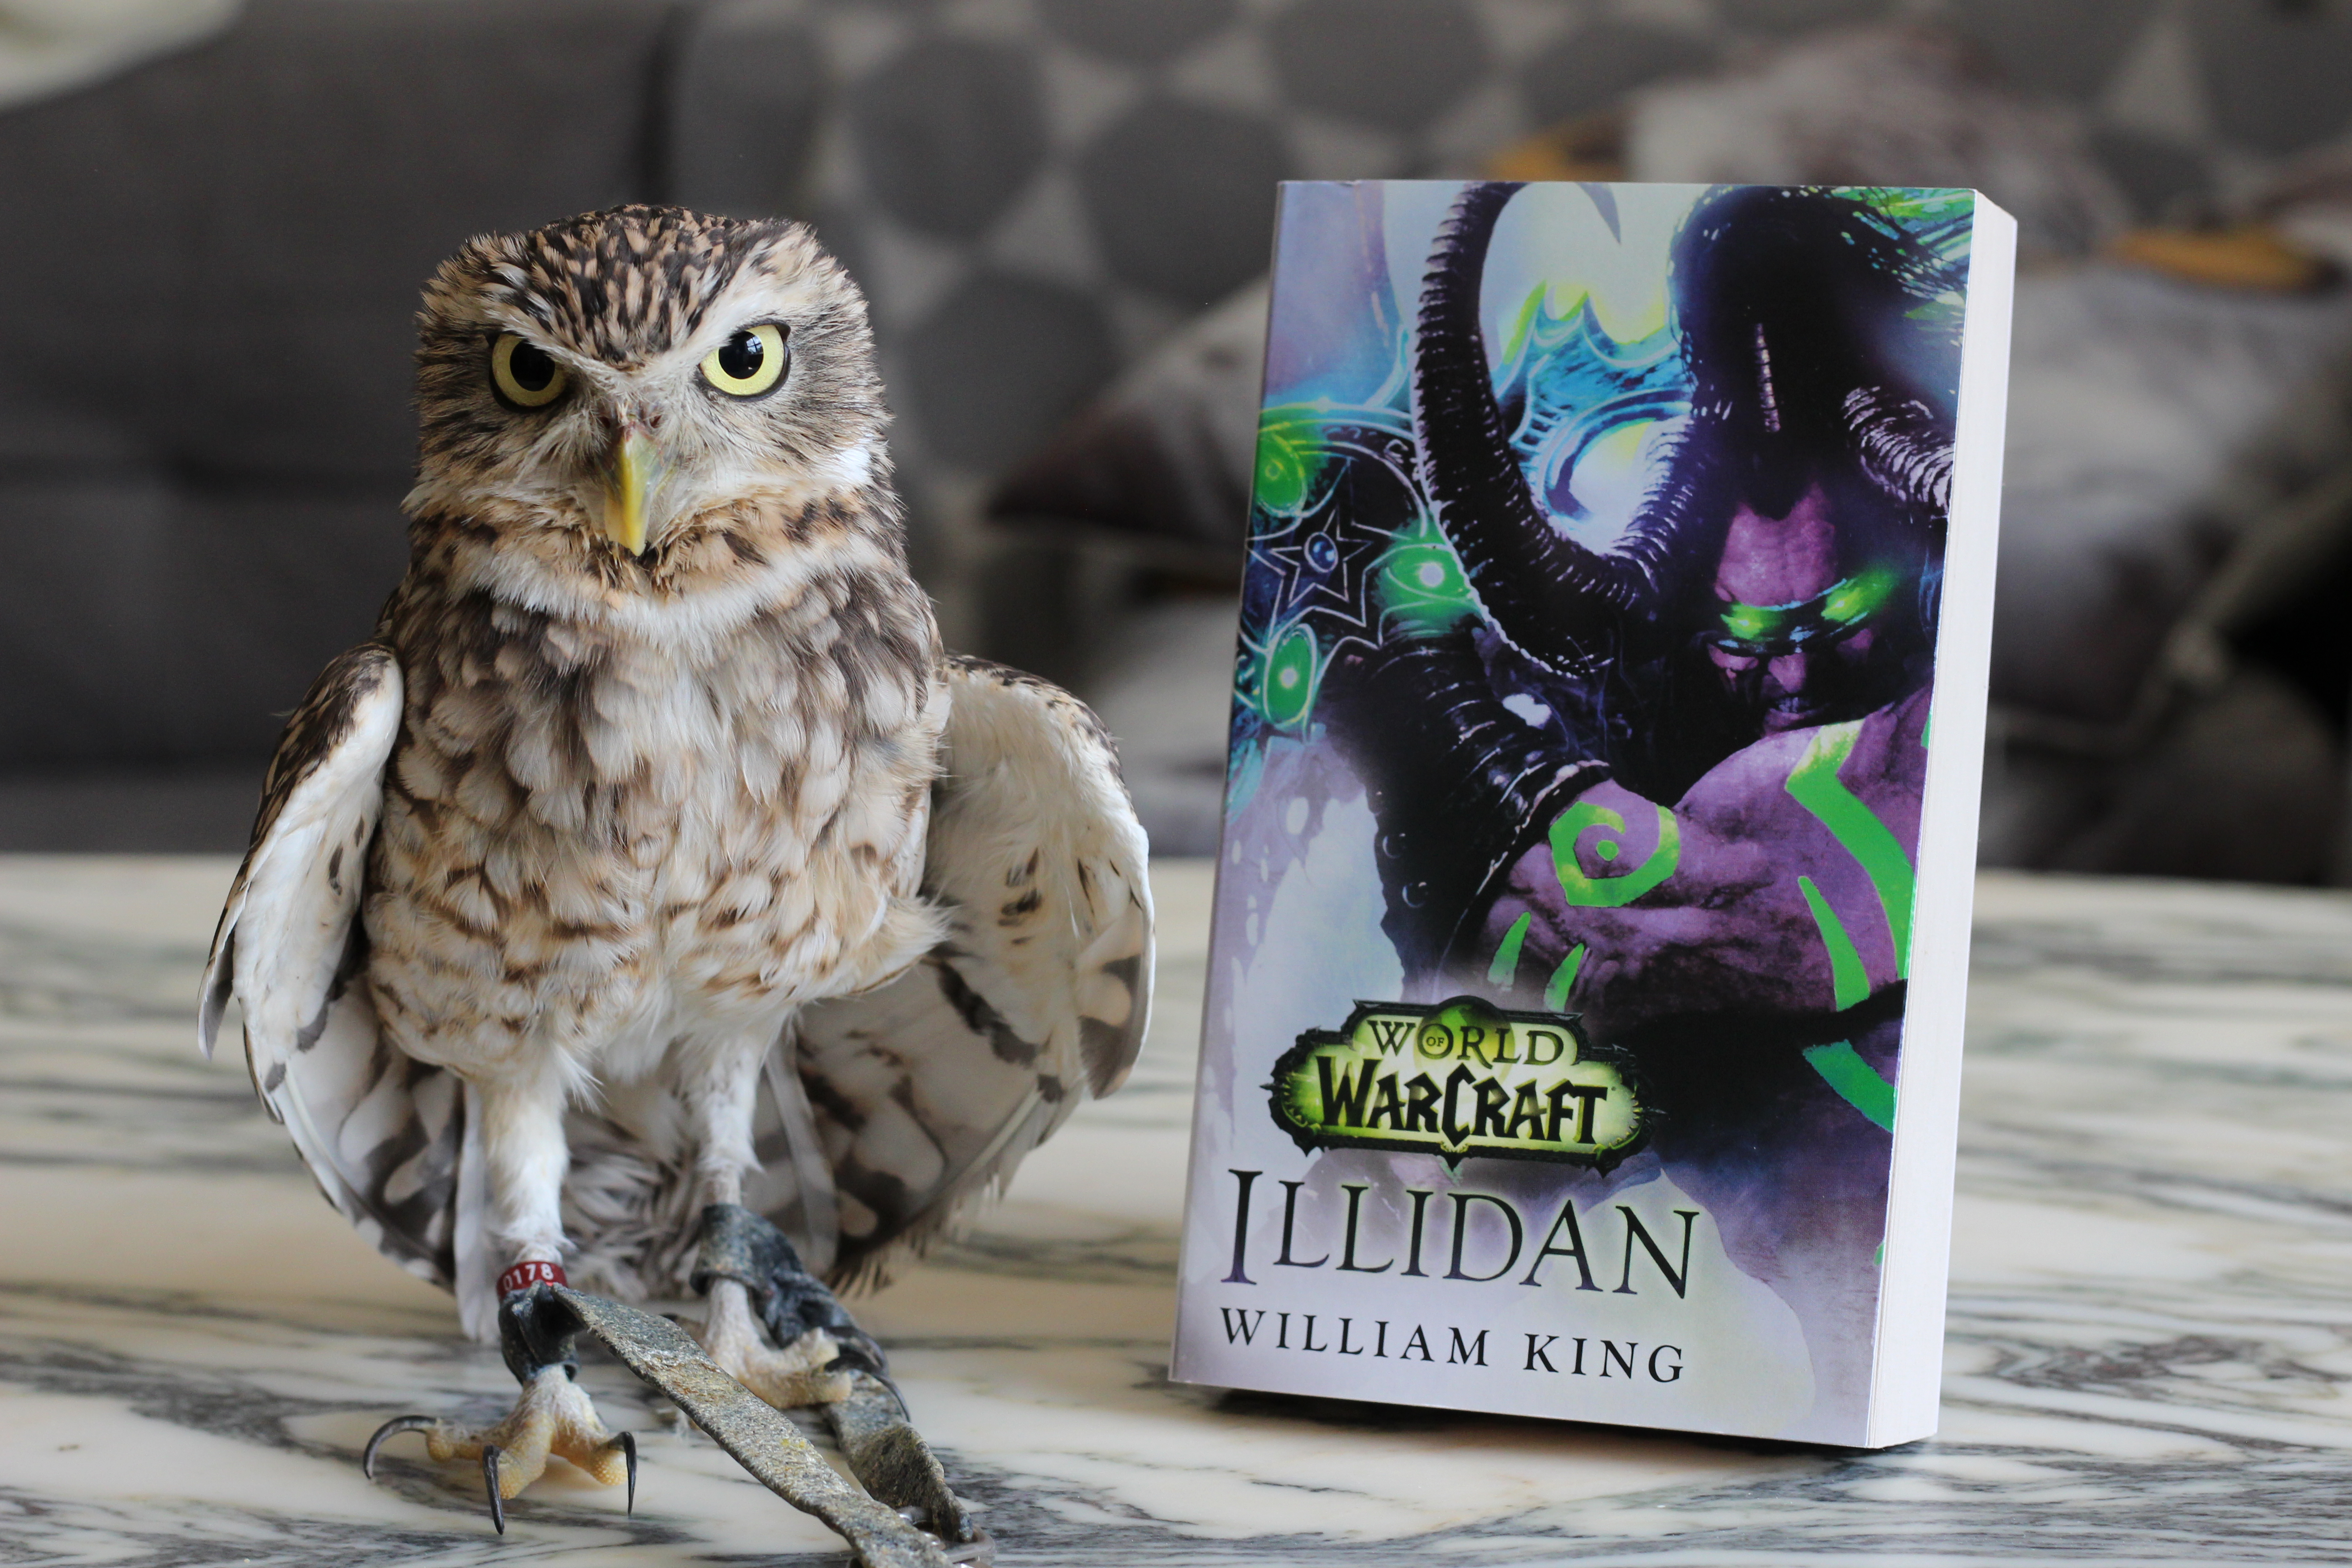 Illidan William King Warcraft Owl